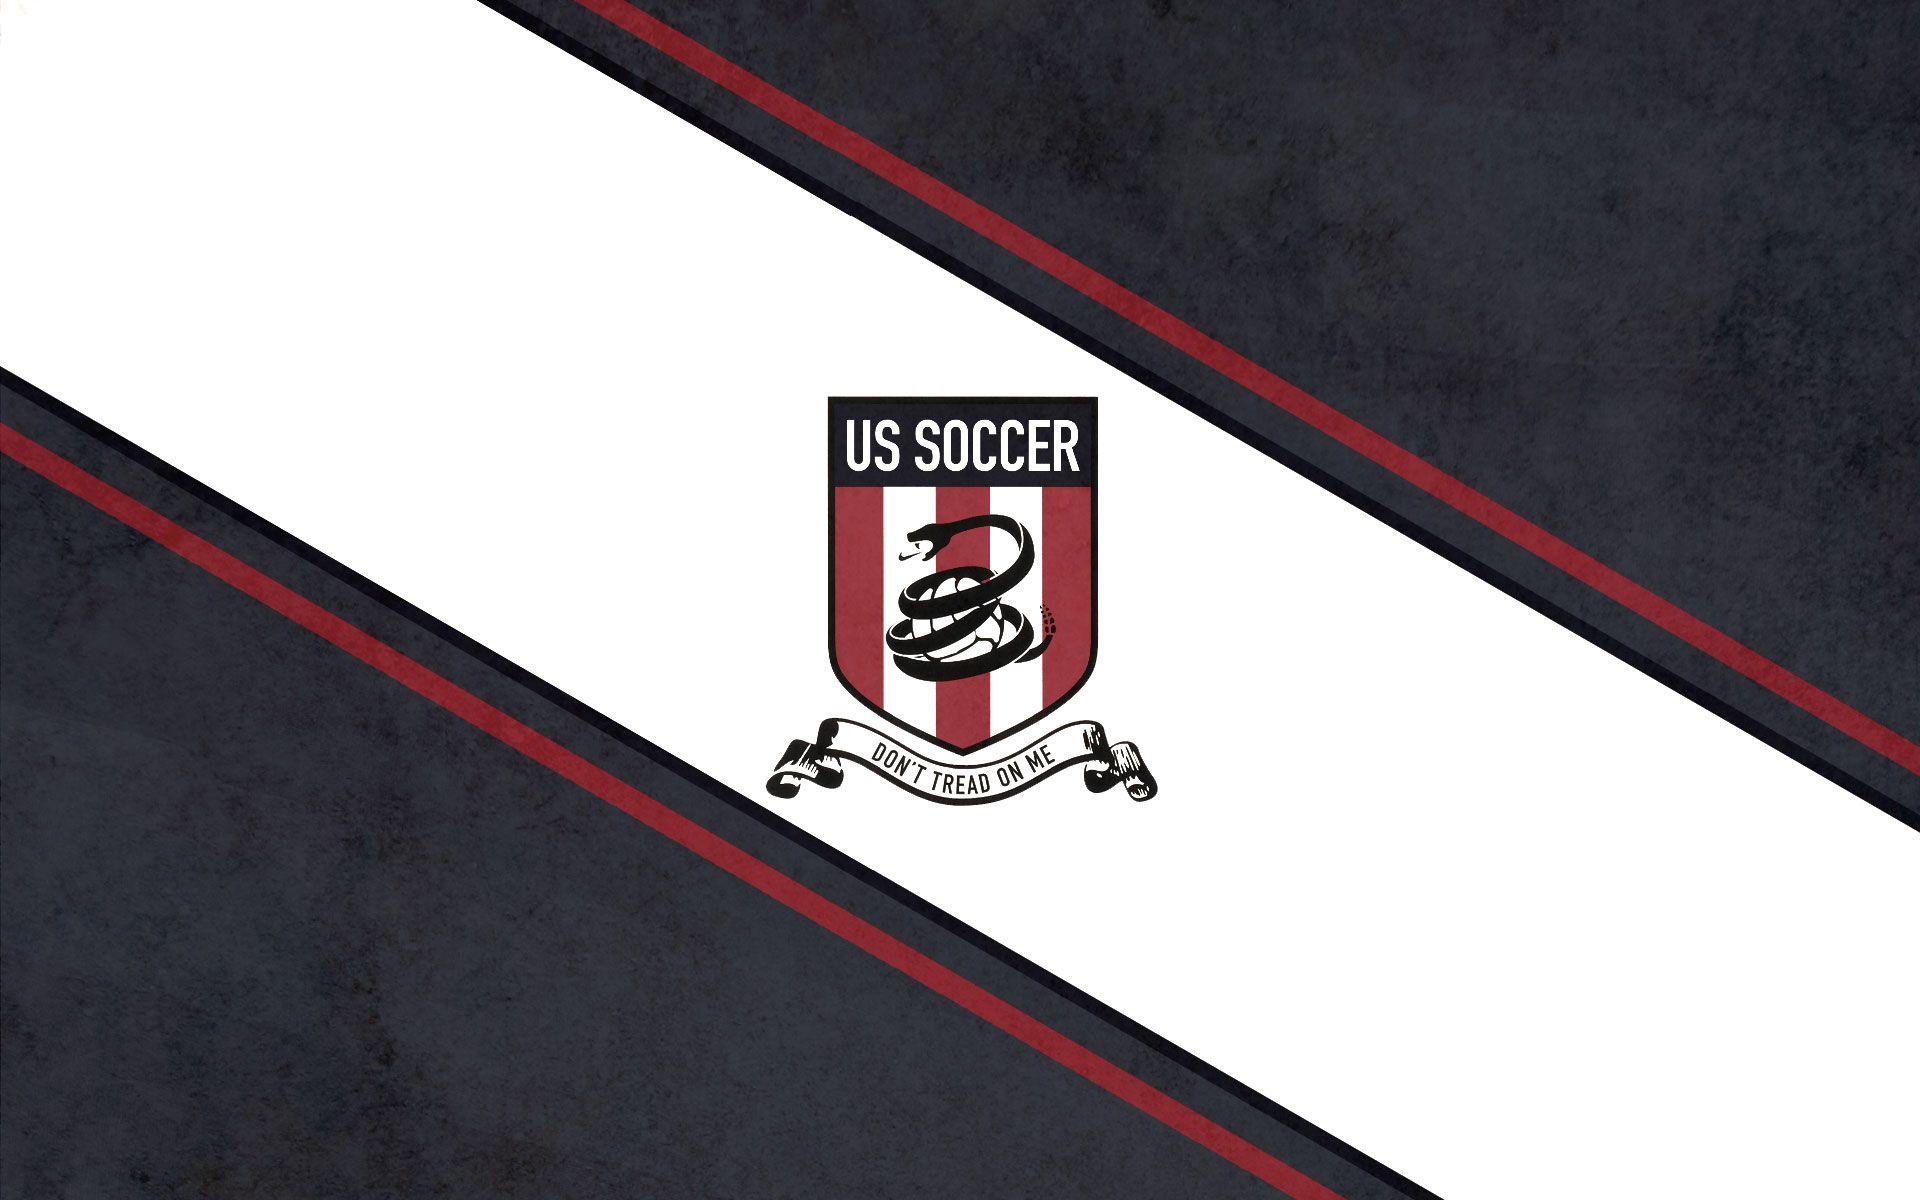  US Soccer Wallpapers Download at WallpaperBro